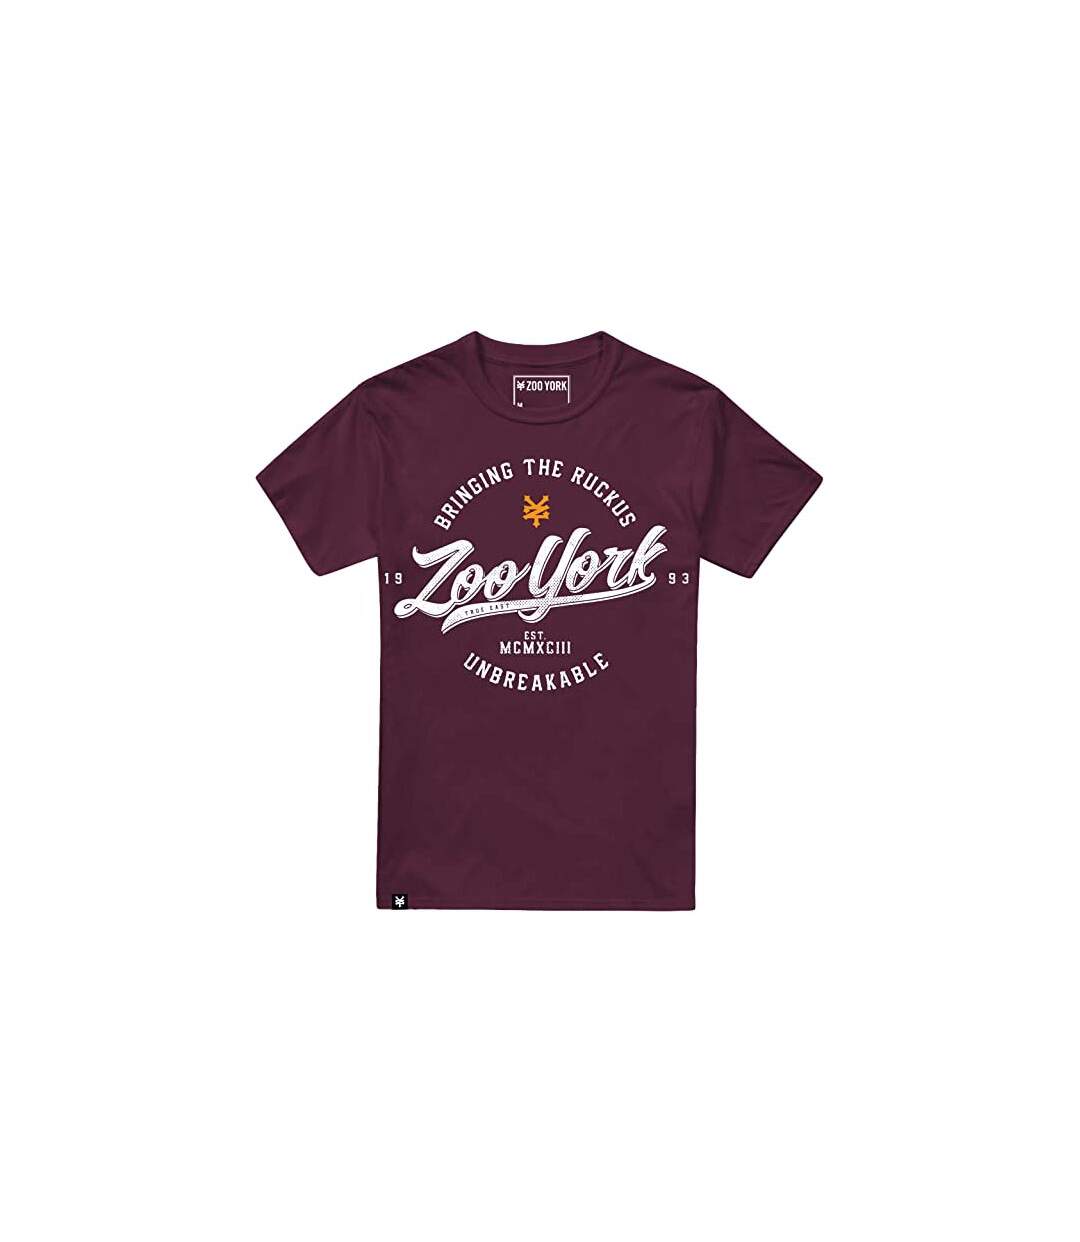 Zoo York - T-shirt UNBREAKABLE - Homme (Bordeaux) - UTTV1165